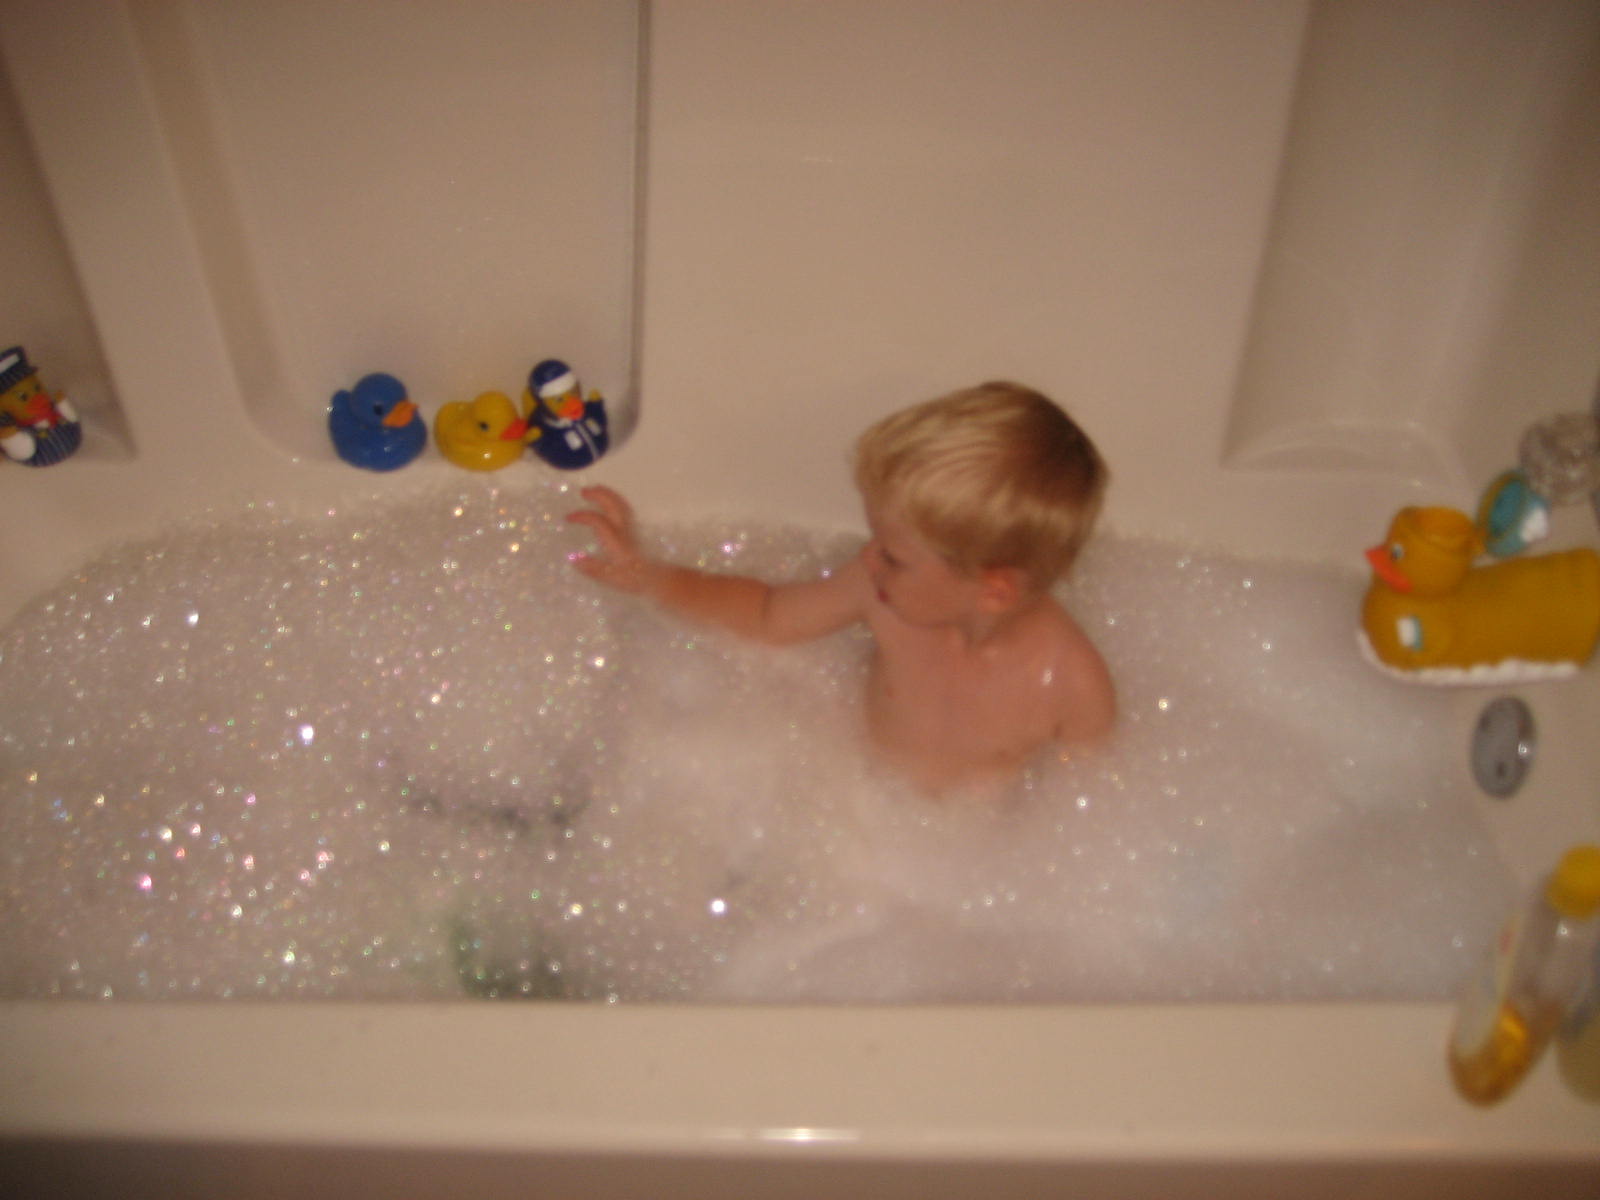 [Ryan+and+his+bubble+bath+001.jpg]